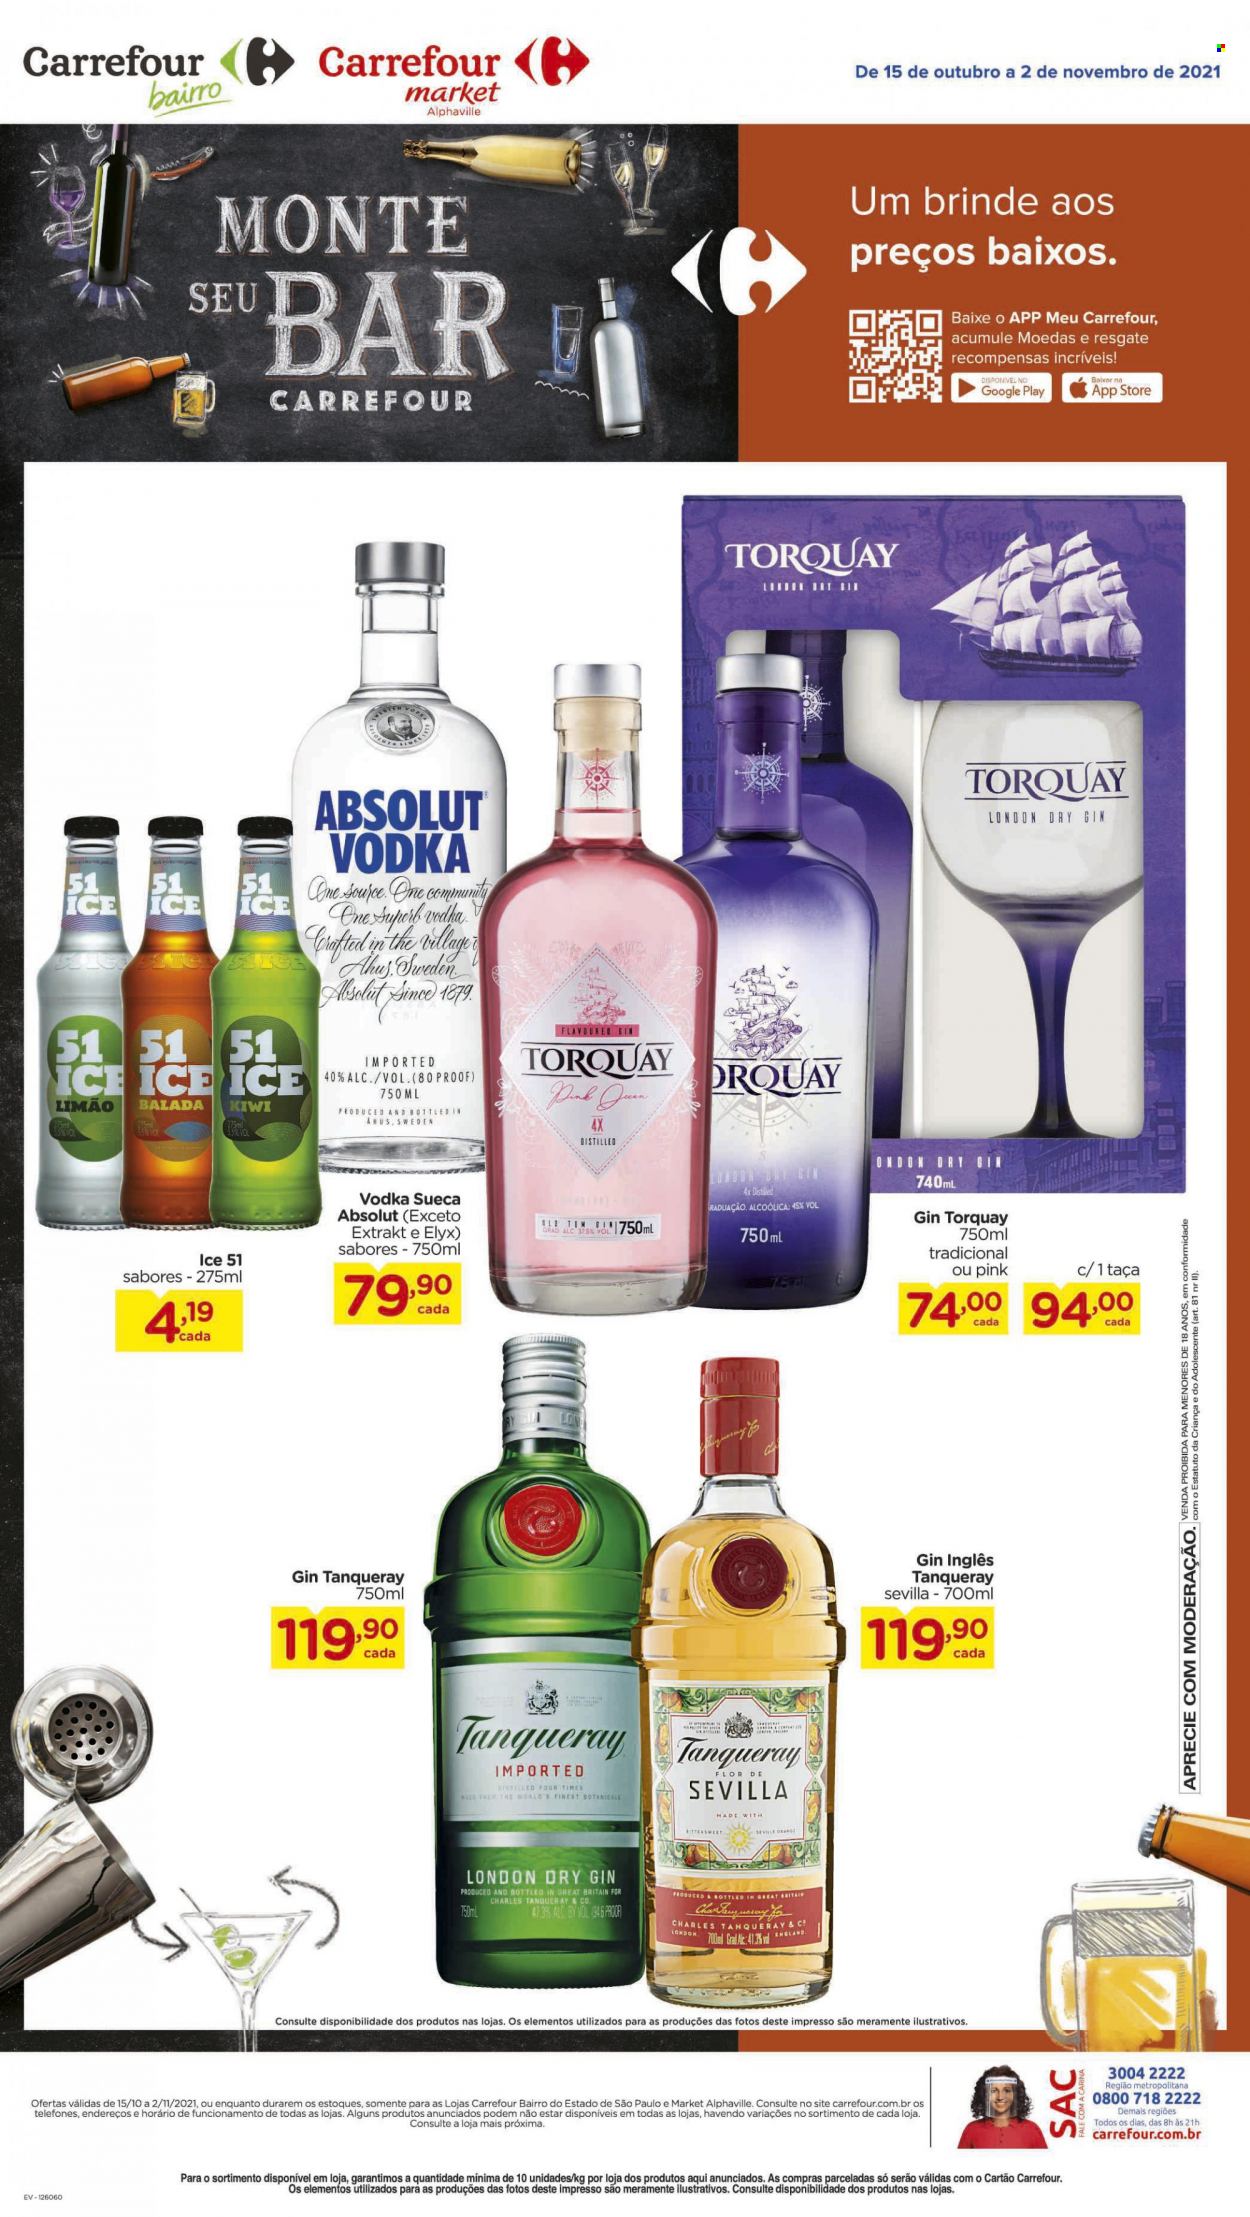 thumbnail - Folheto Carrefour - 15/10/2021 - 02/11/2021 - Produtos em promoção - kiwi, limão, Absolut Vodka, gin, vodka, London Dry Gin, Tanqueray, taça. Página 2.